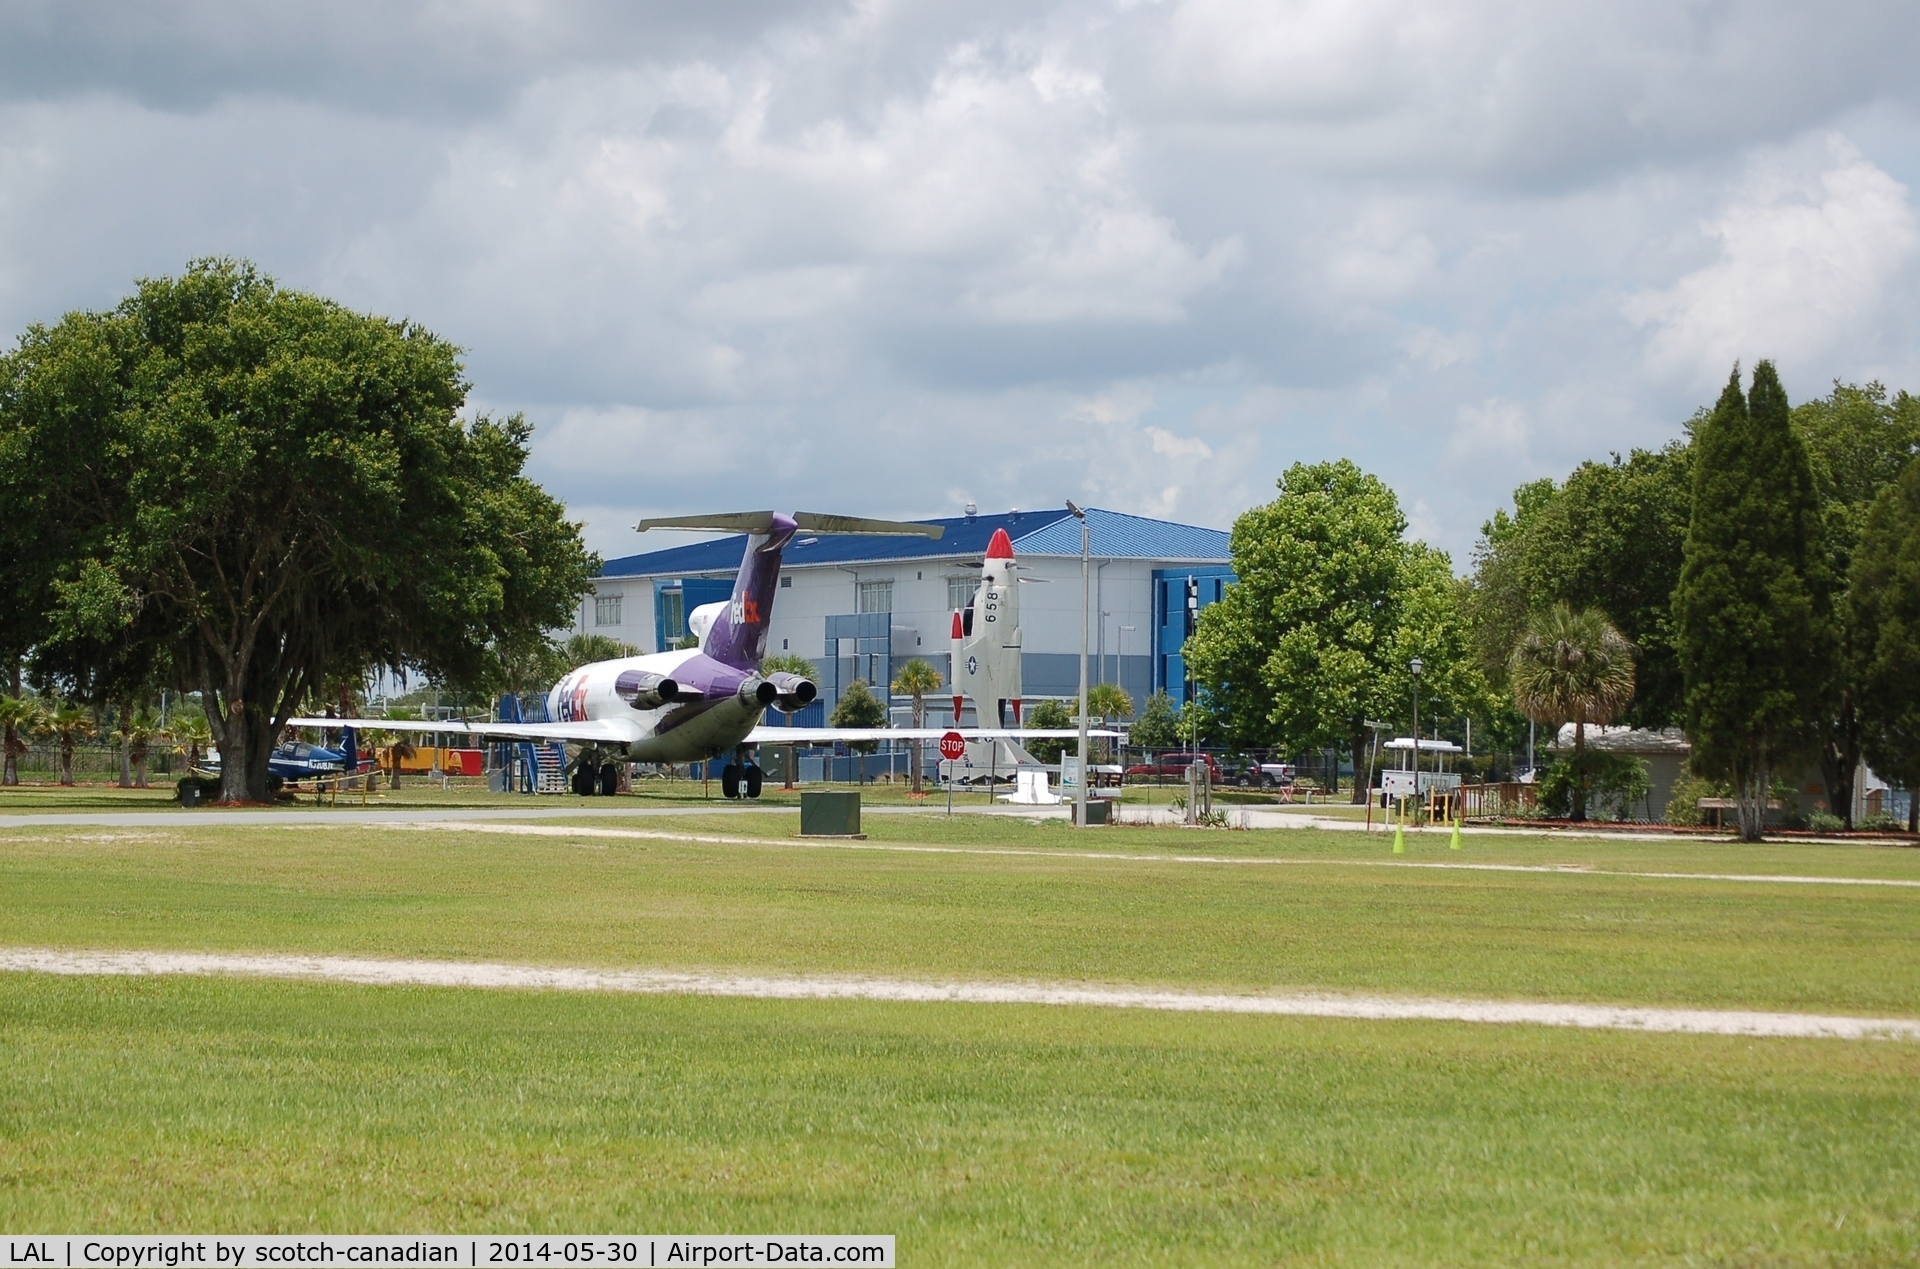 Lakeland Linder Regional Airport (LAL) - Central Florida Aerospace Academy at Lakeland Linder Regional Airport, Lakeland, FL 